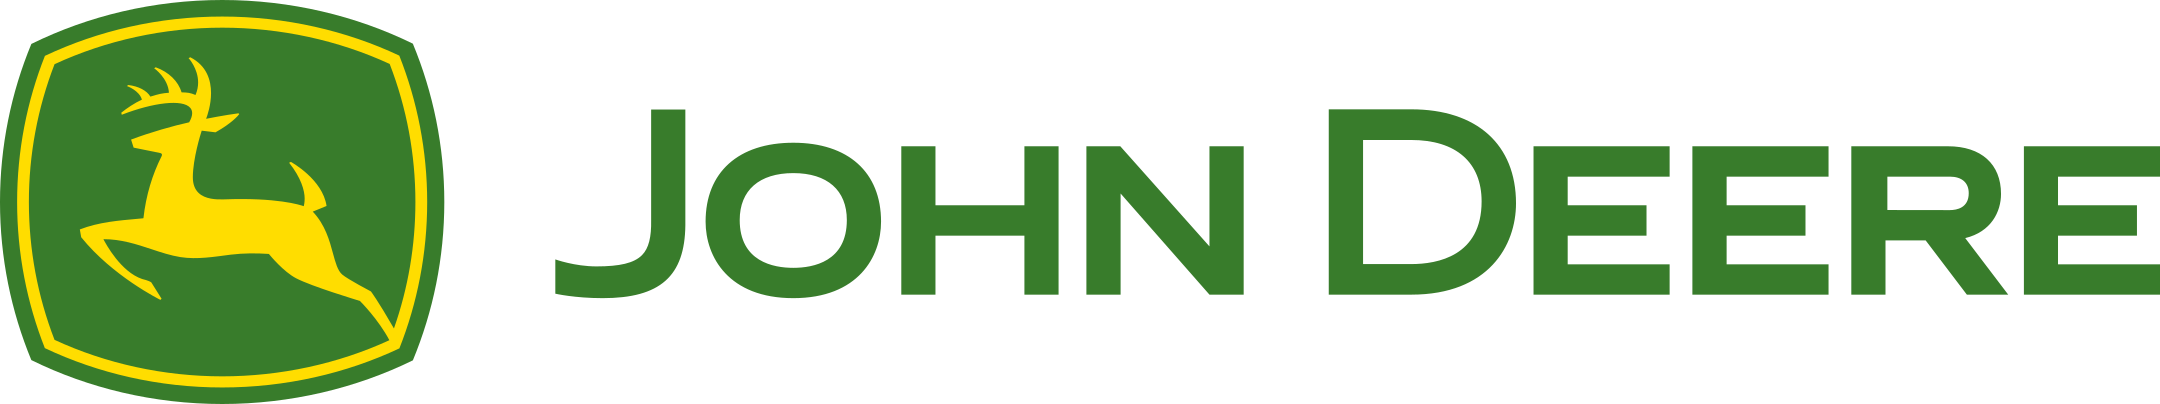 john-deere-logo-1